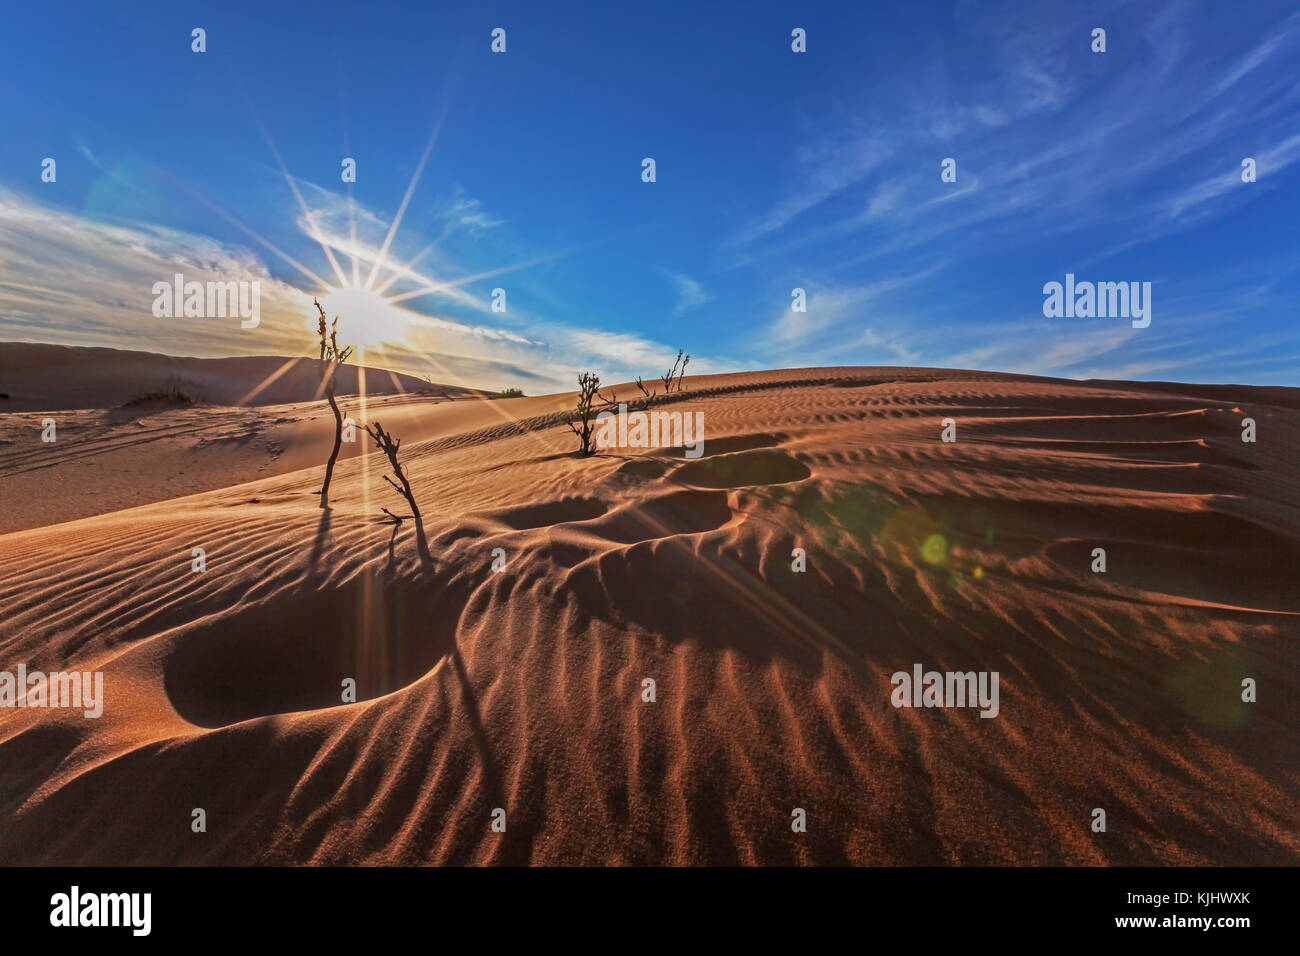 Footprints in the desert, Saudi Arabia Stock Photo